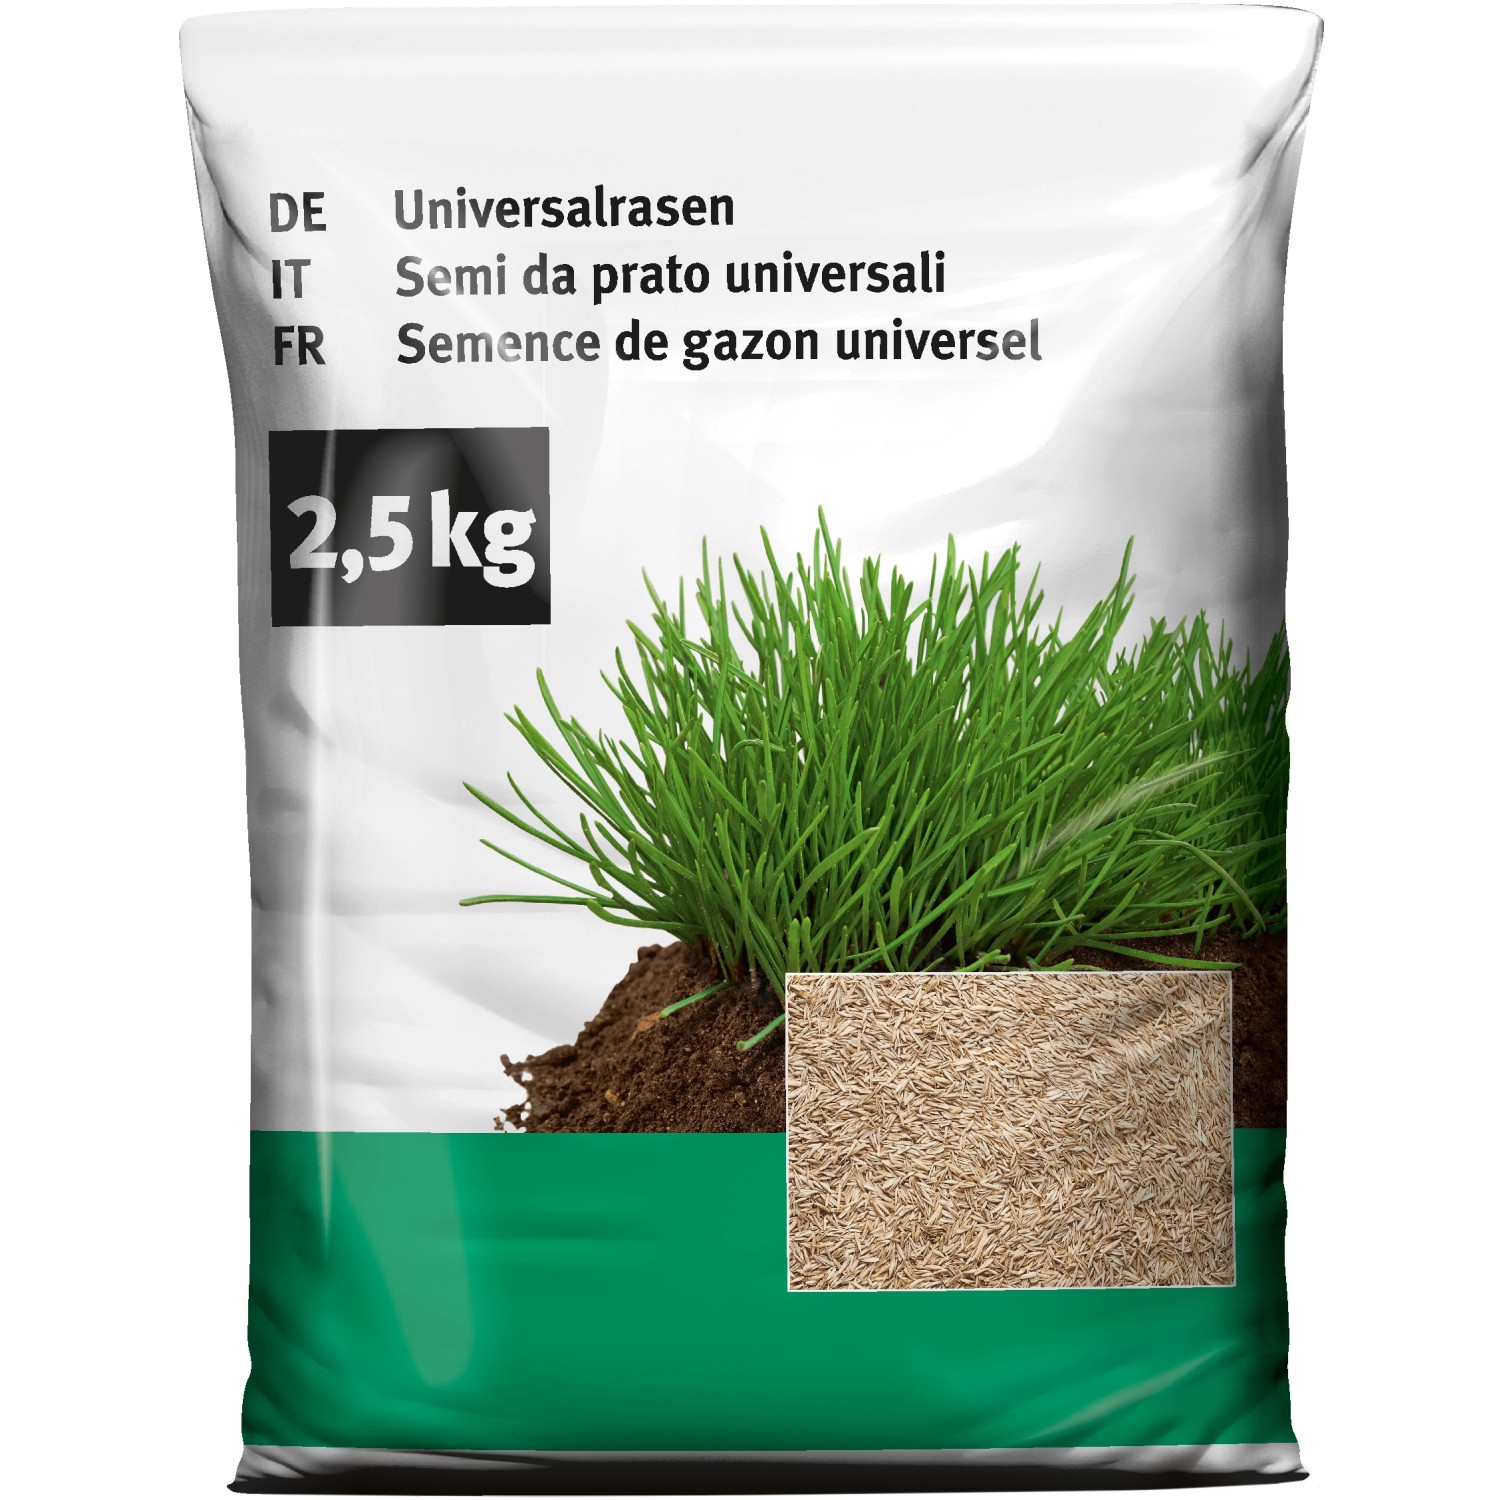 Universal Rasen 2,5 kg